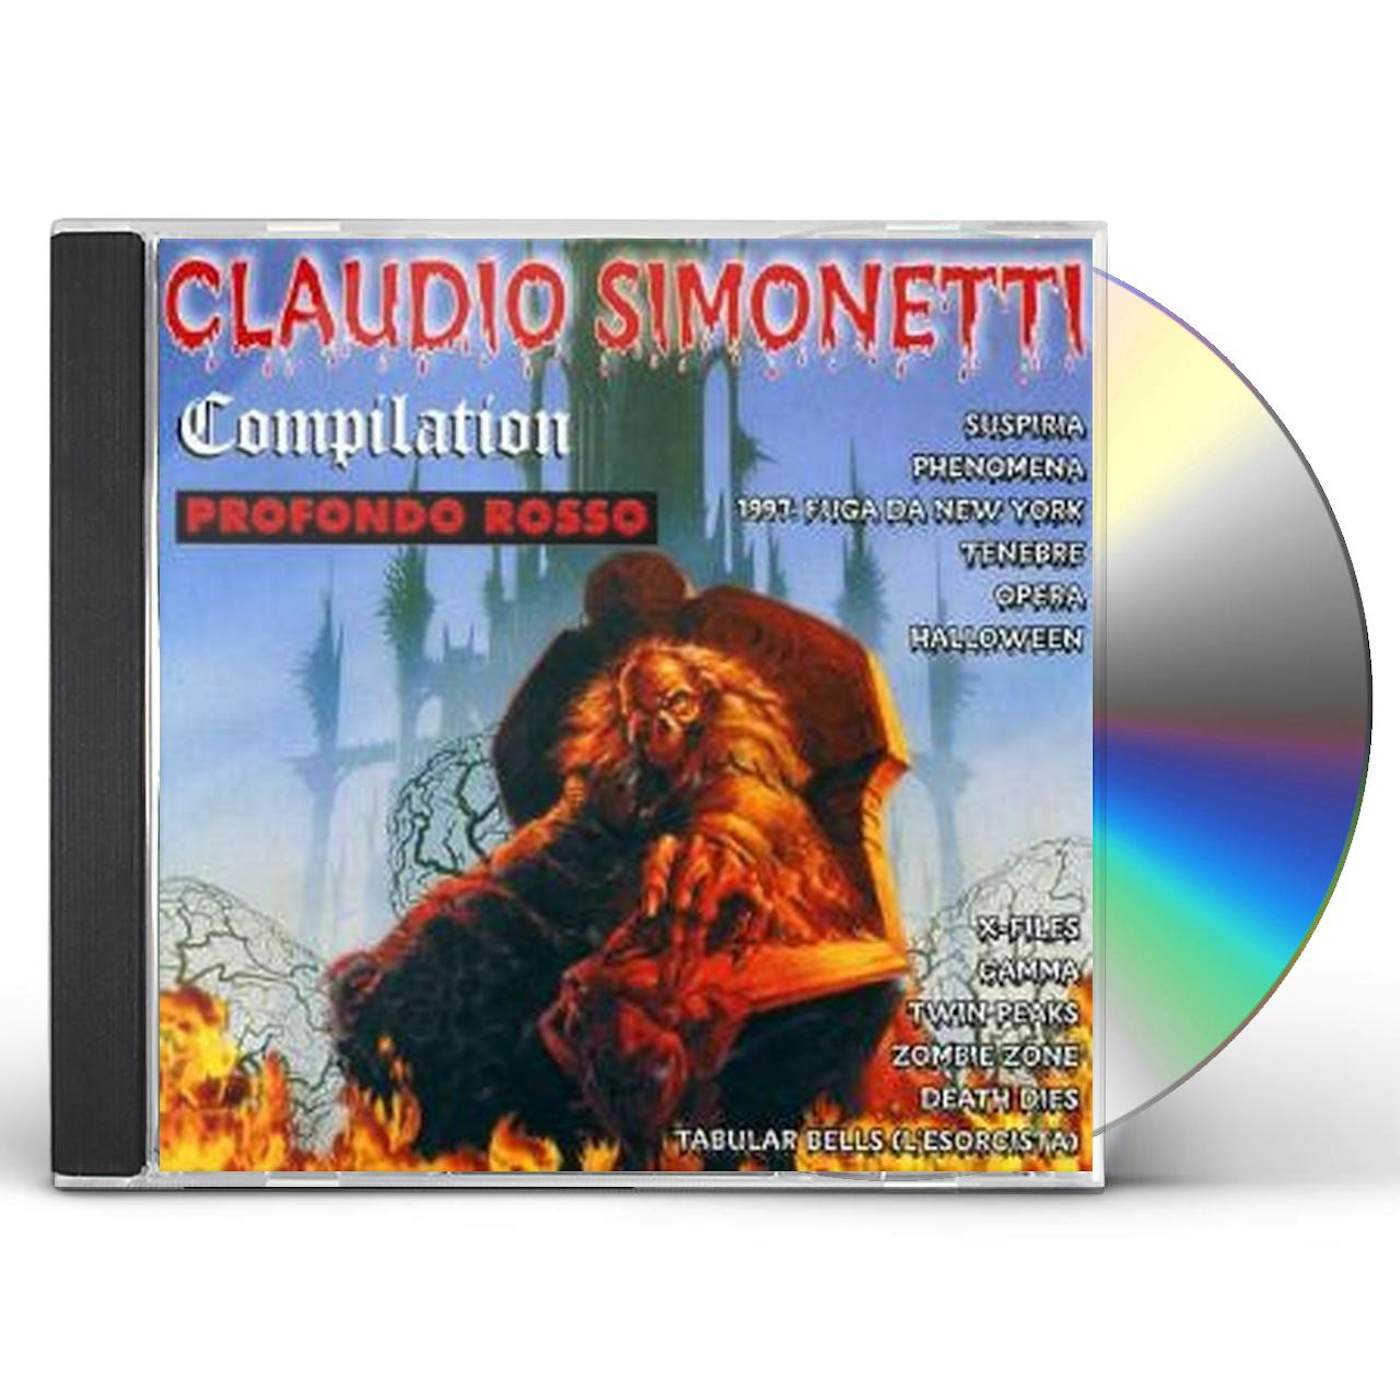 Claudio Simonetti COMPILATION/PROFON CD